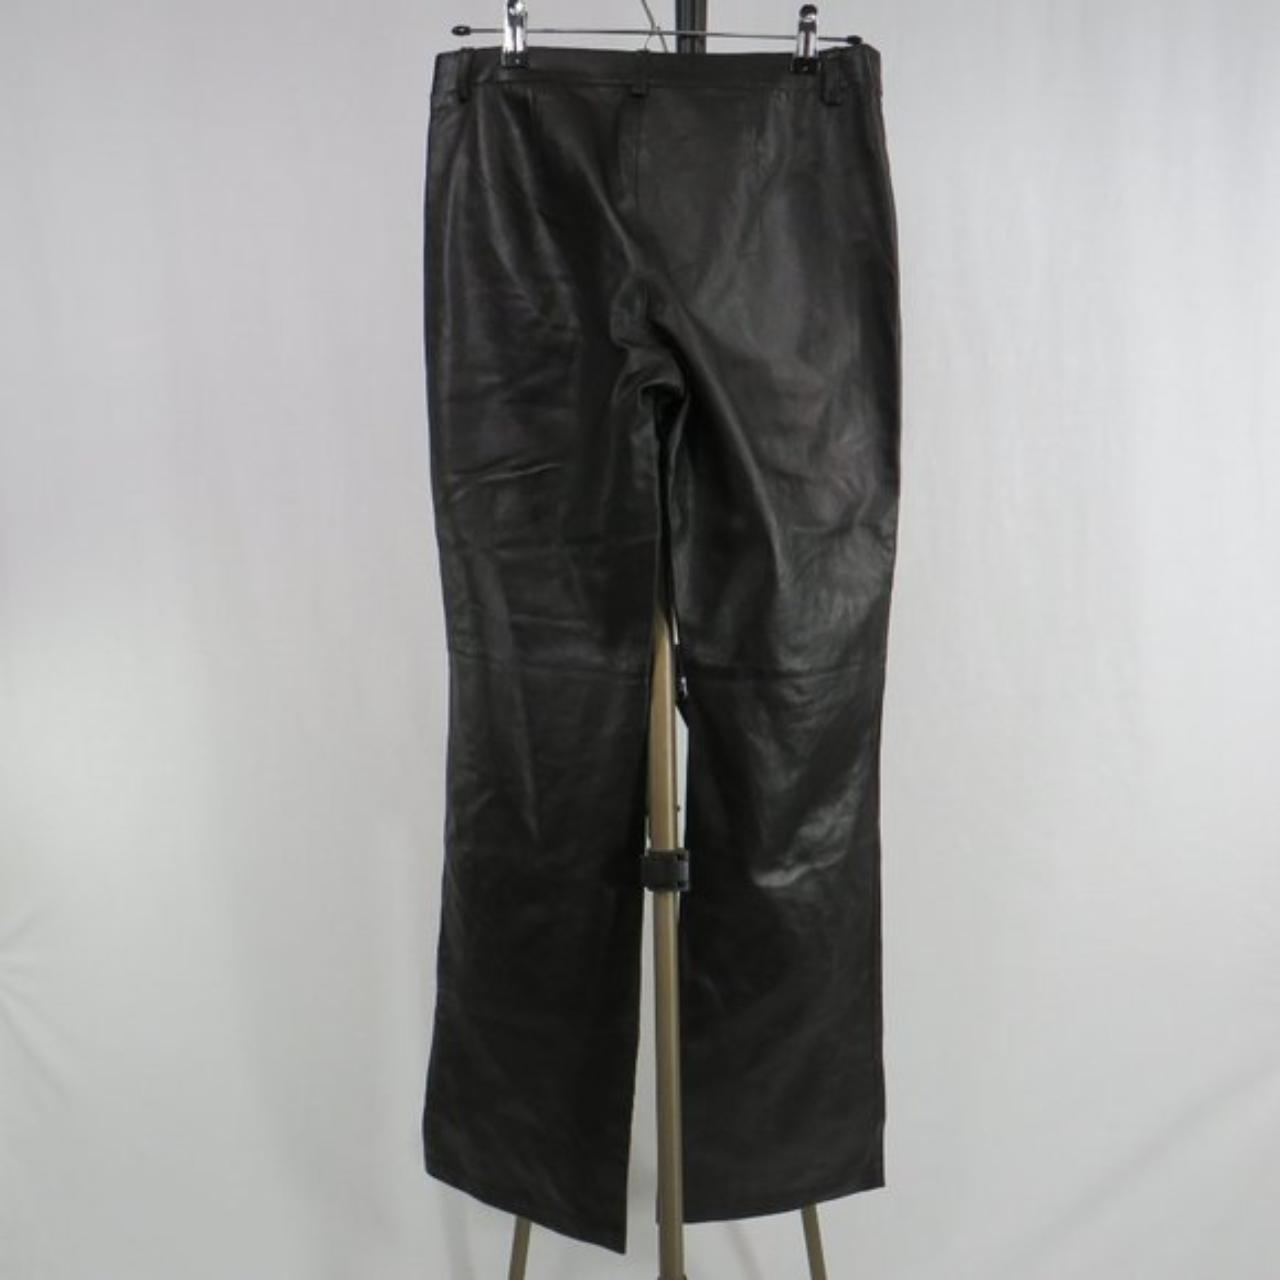 MODA International black leather mid-rise... - Depop